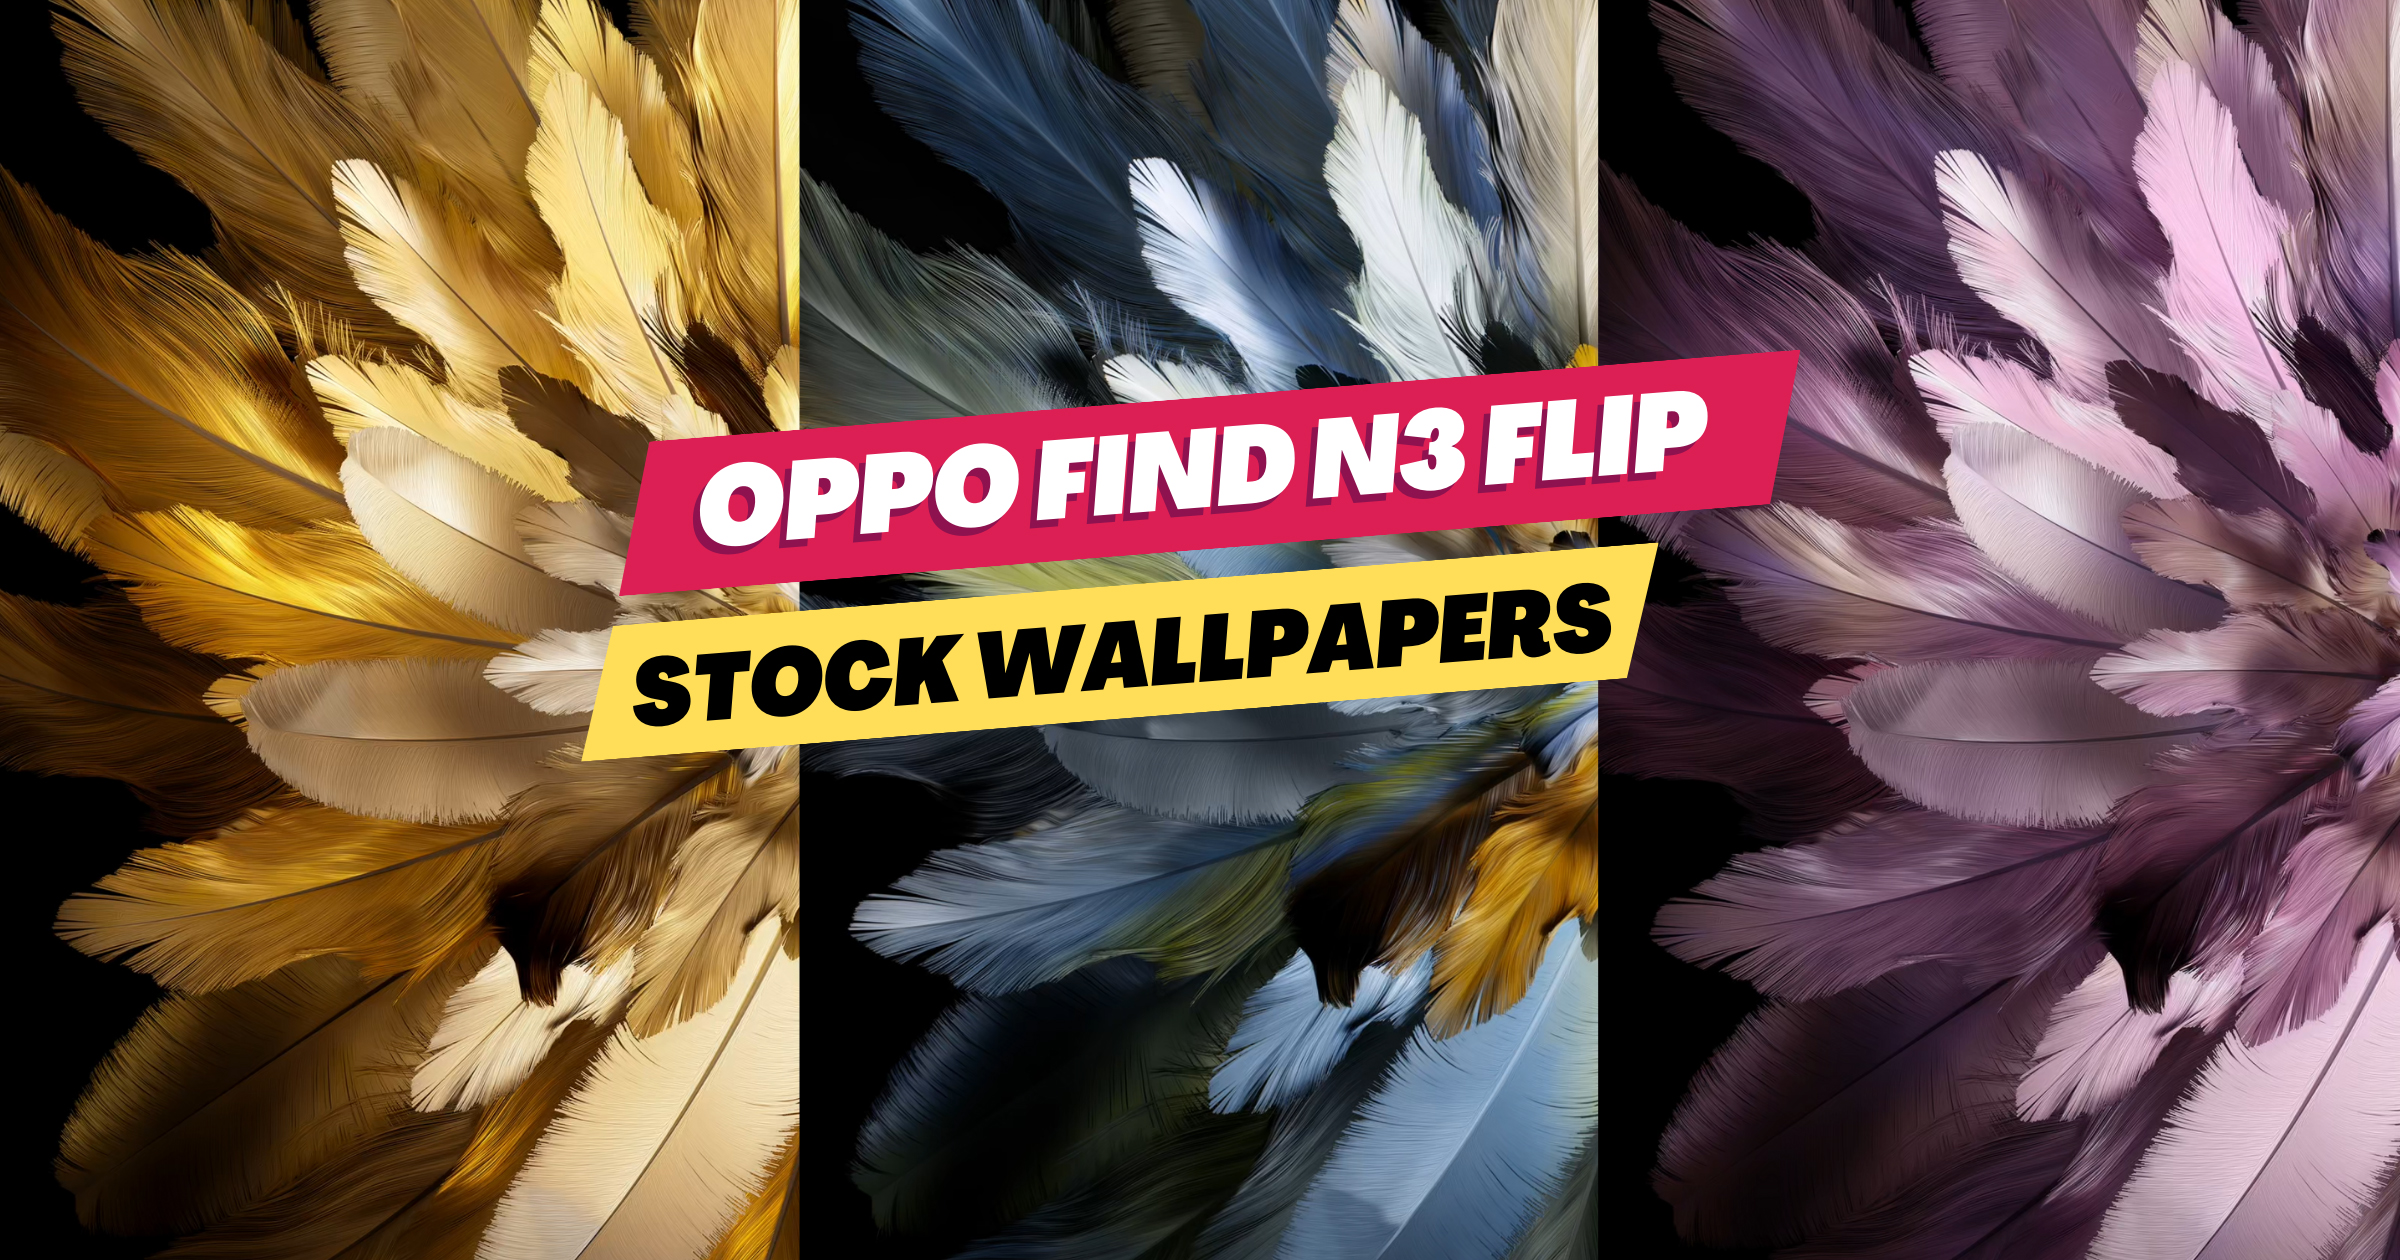 Download Oppo Find N3 Flip Stock Wallpapers